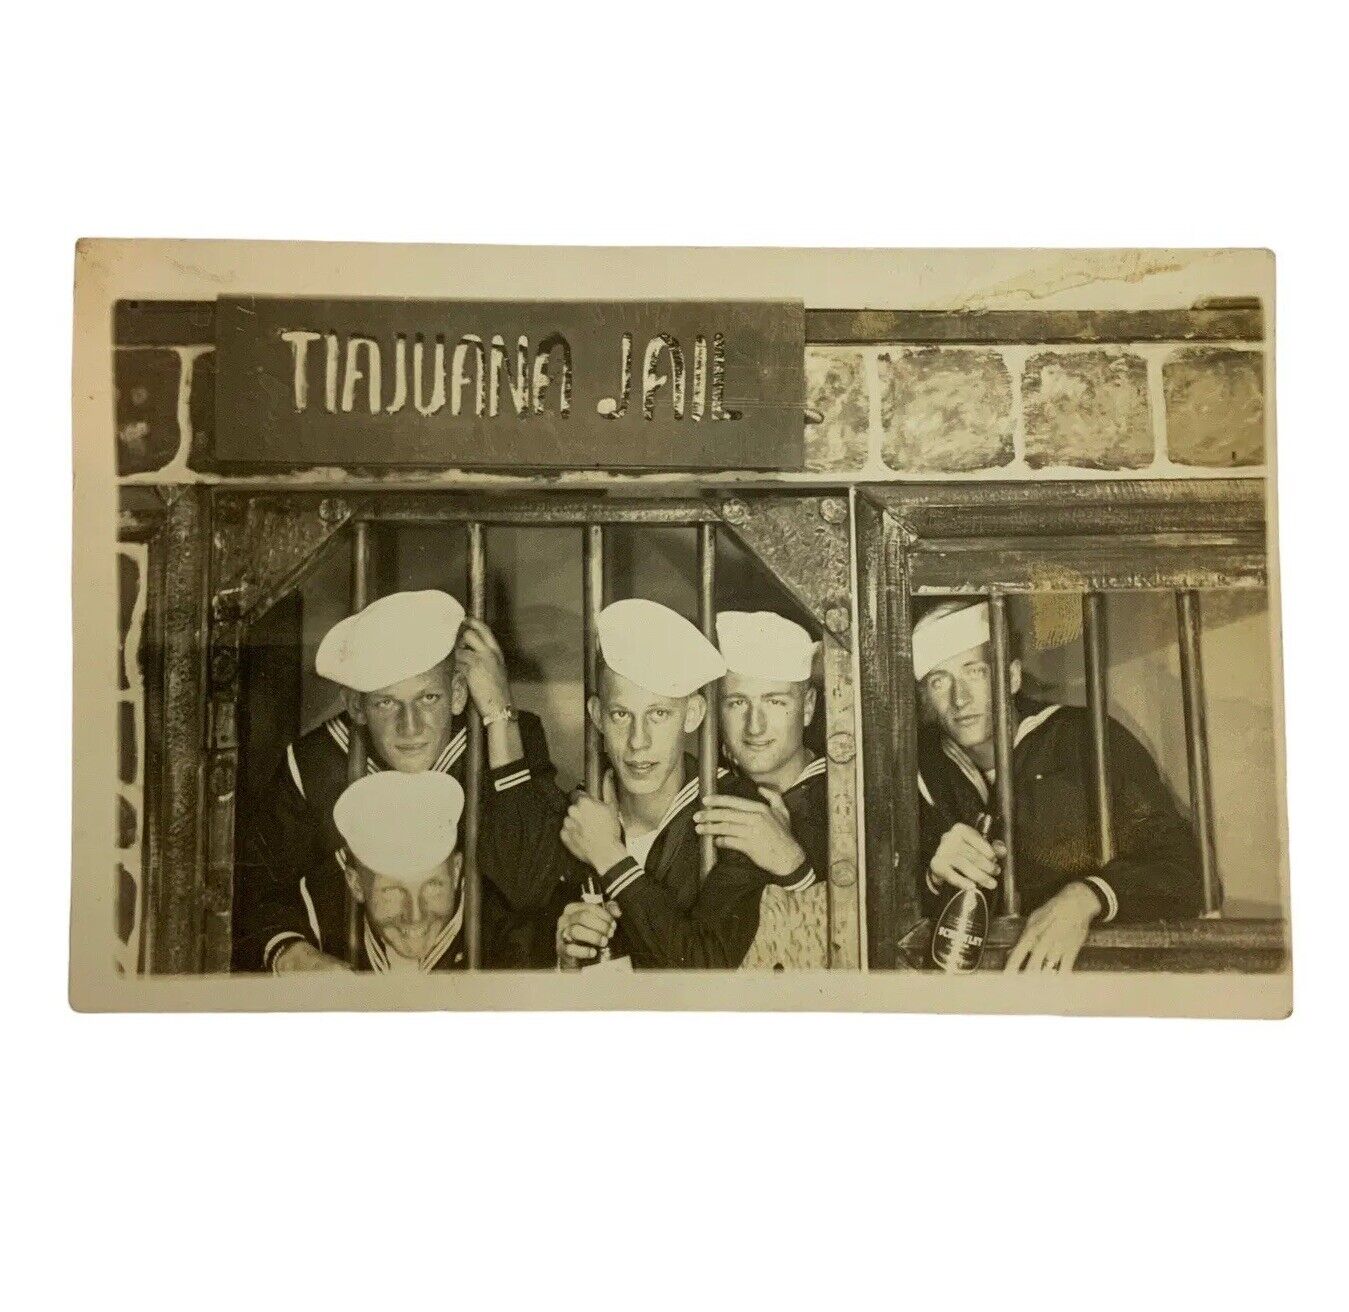 Drunken Sailors On Liberty Tijuana Jail Photo Postcard 1944 World War II Era